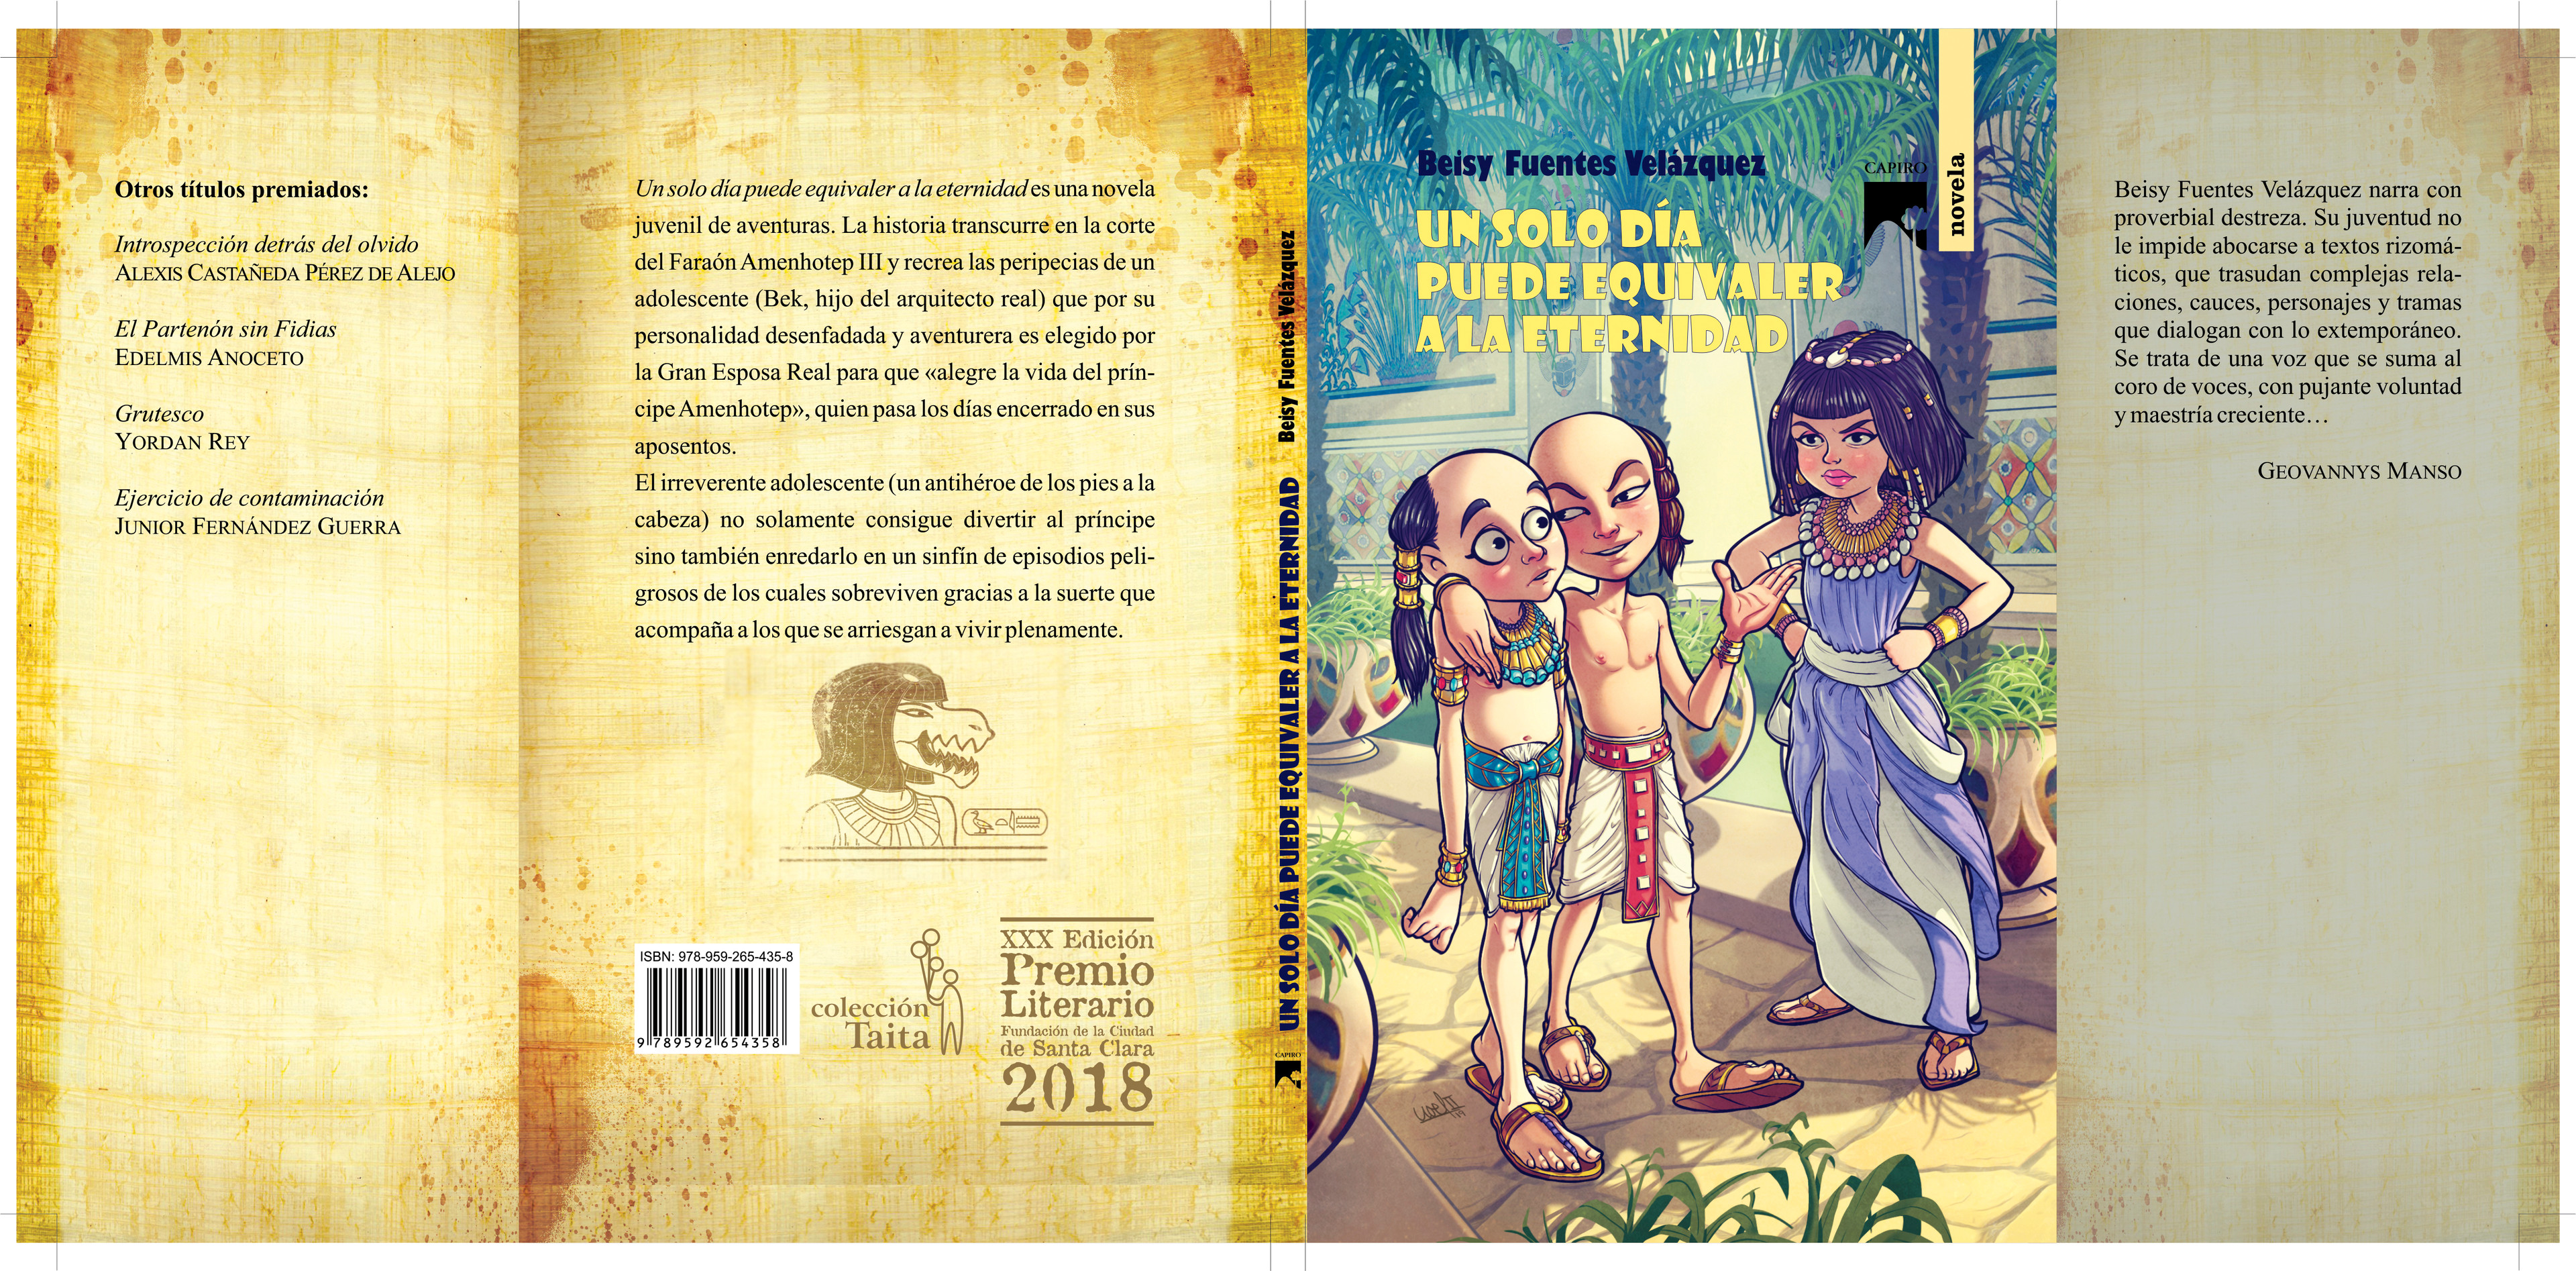 Final cover design